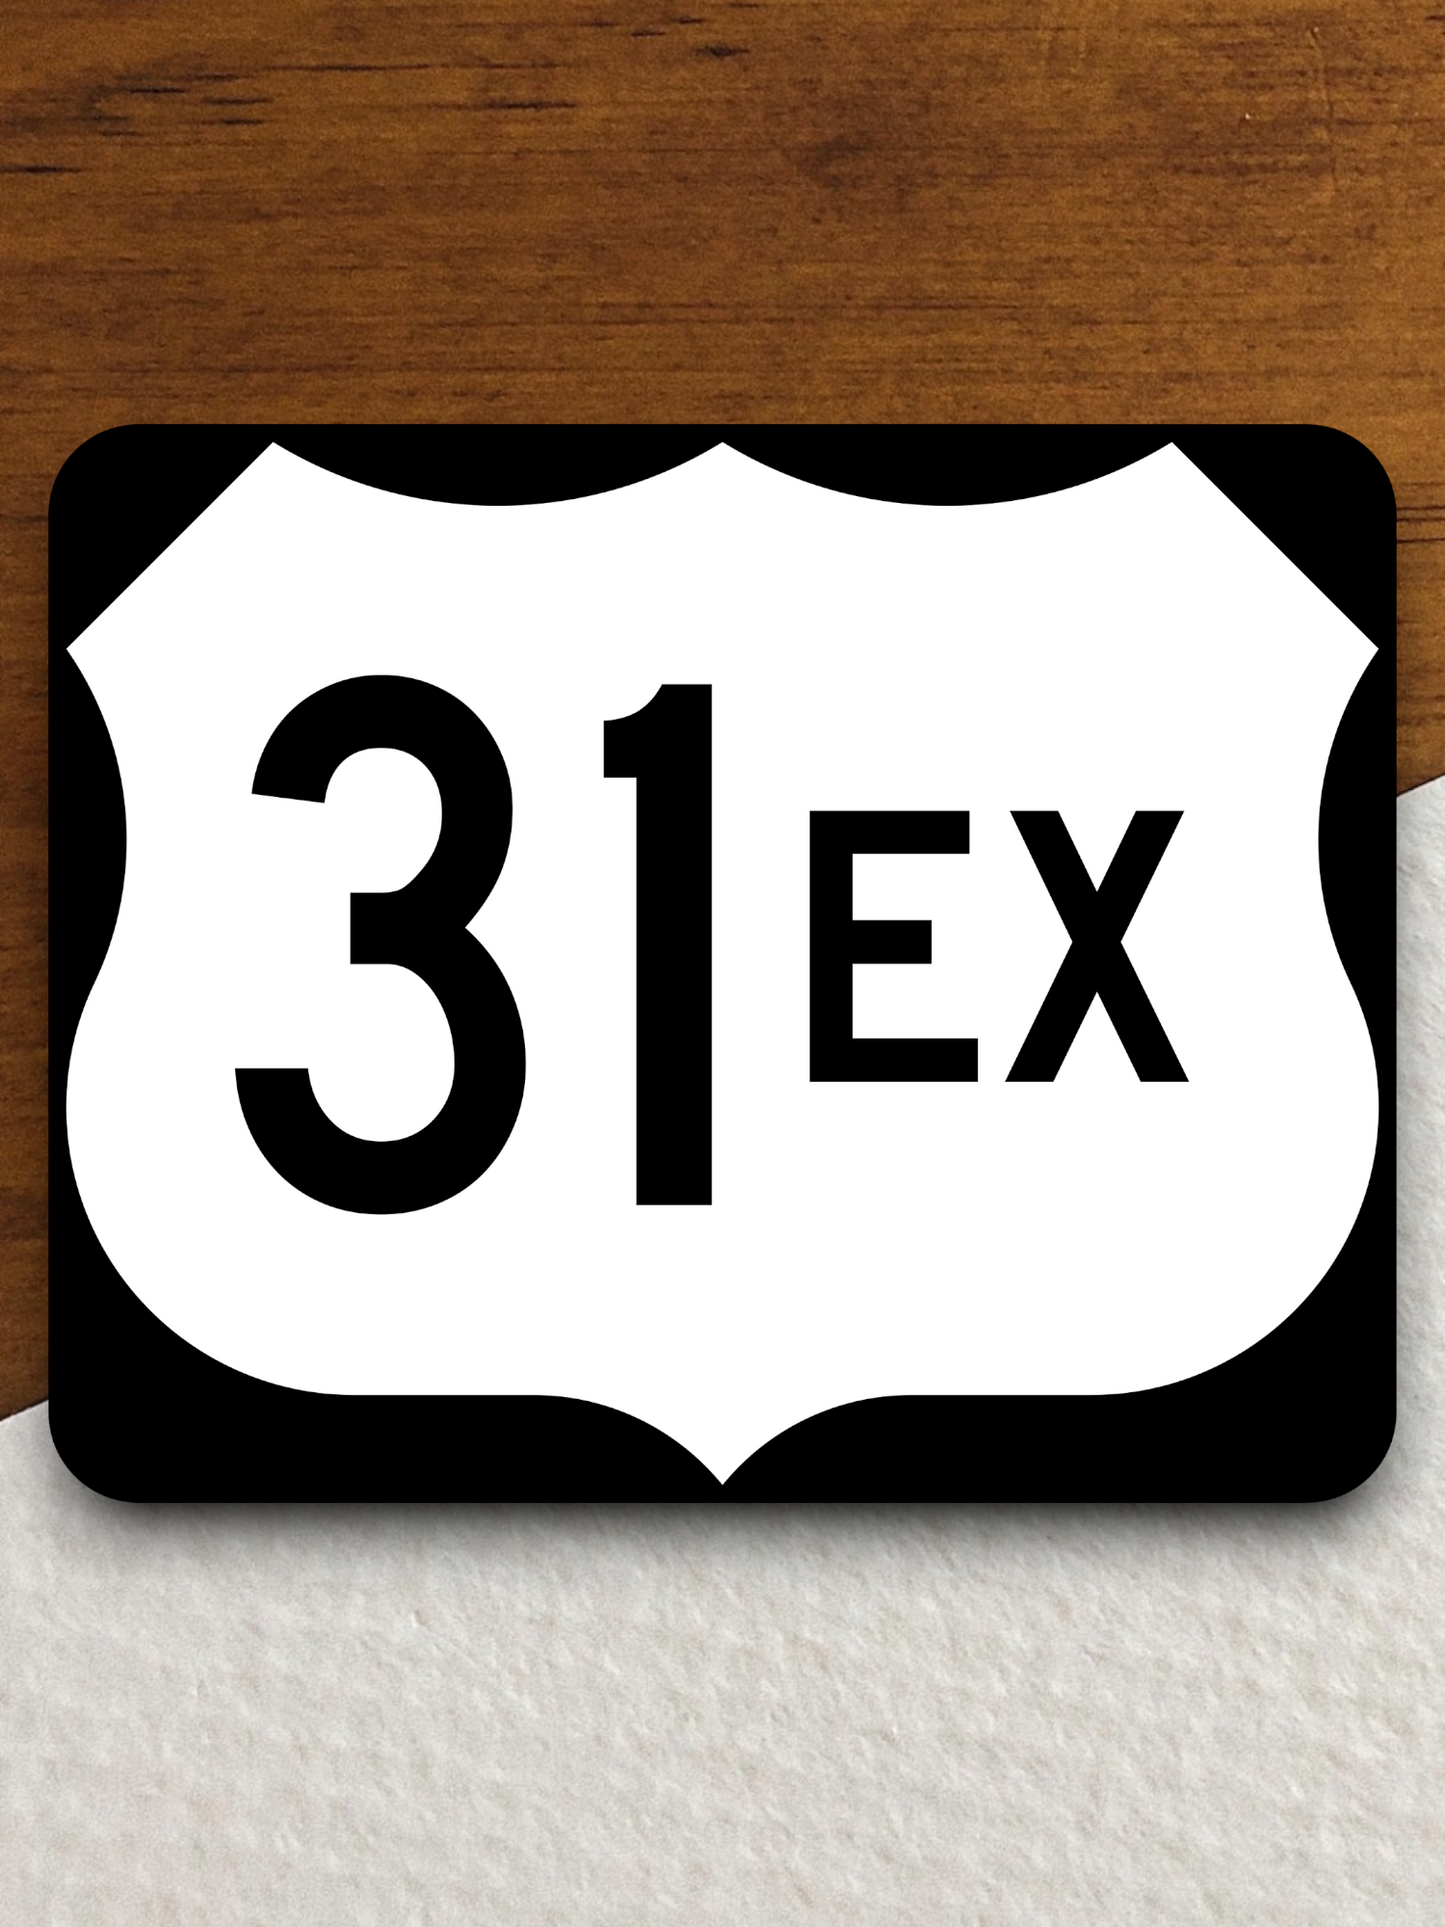 U.S. Route 31EX Road Sign Sticker